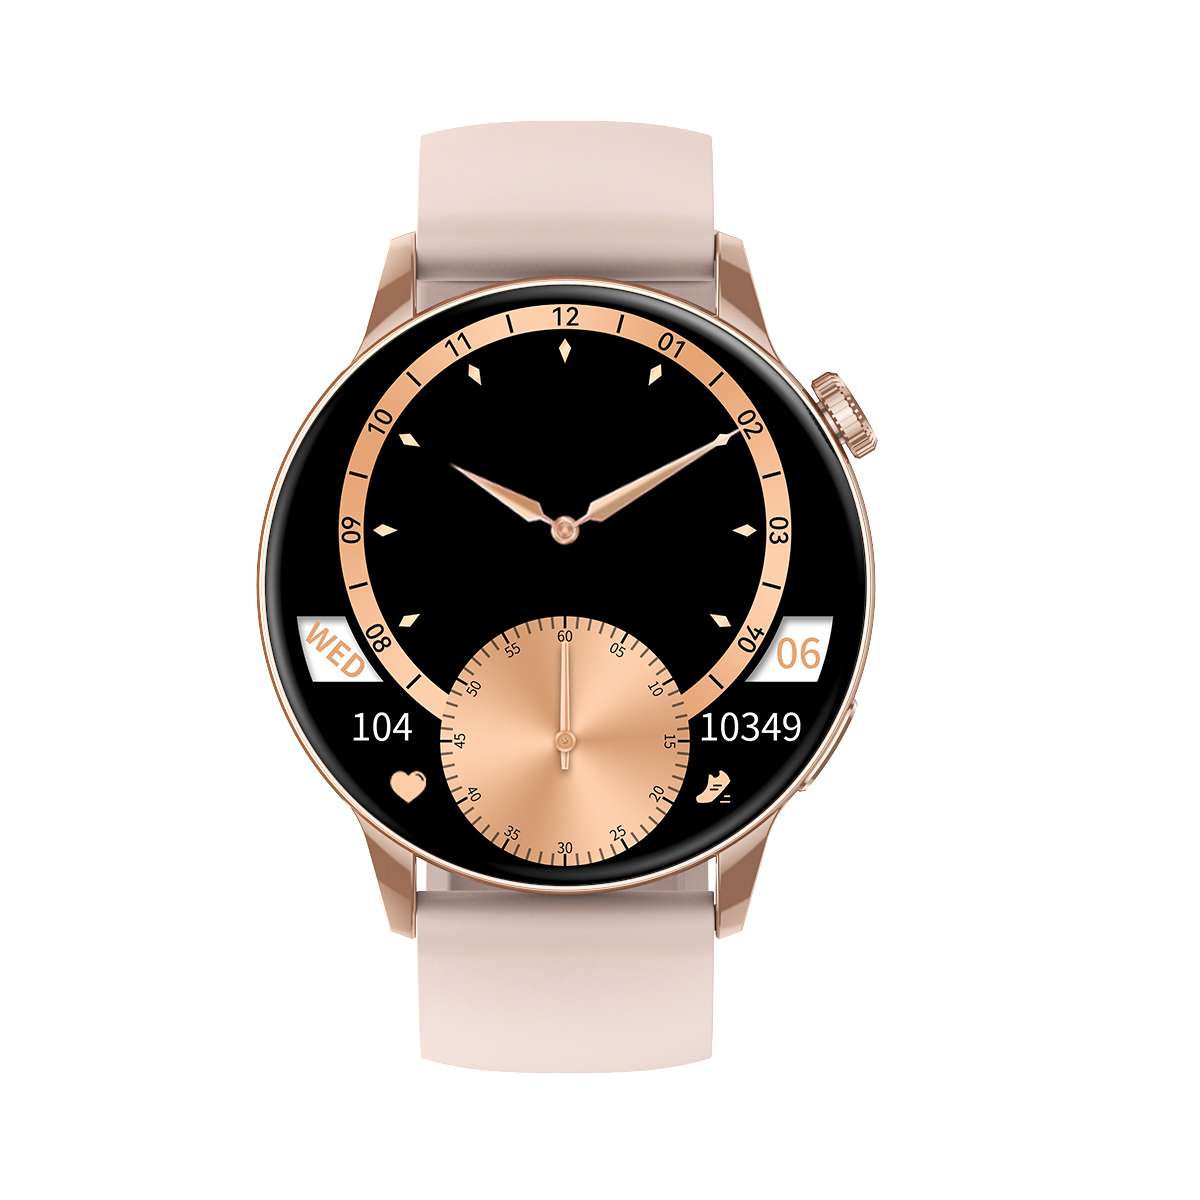 MIRUX HD1 Watch Tracker Silikon, Pink Smartwatch Telefonfunktion 240 Rund Fitness Gold mm